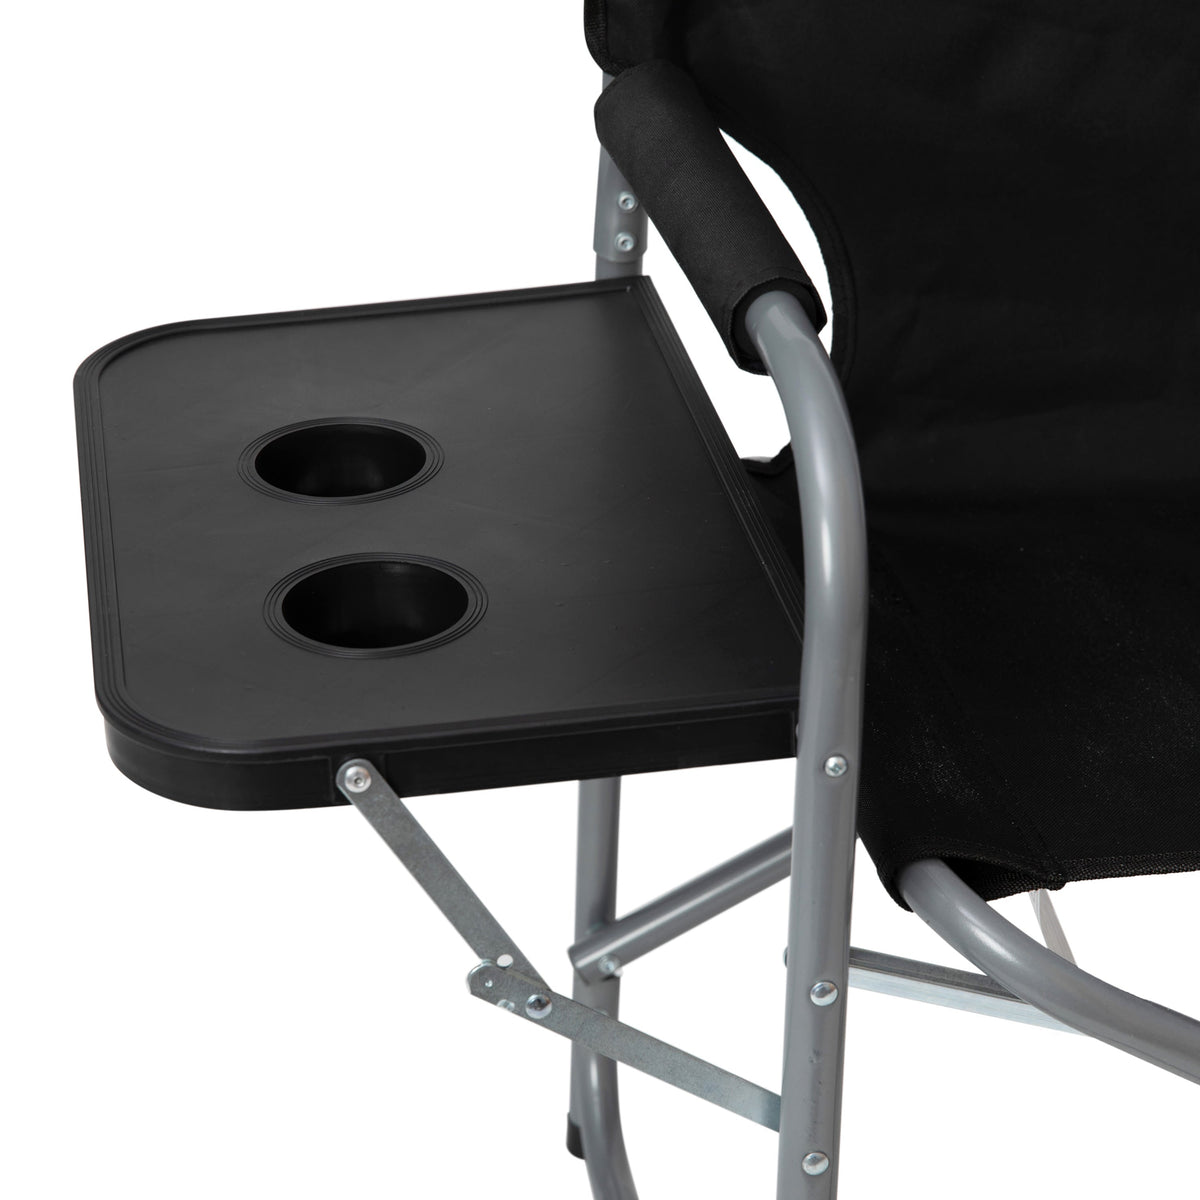 Black |#| Foldable Steel Tube Framed Directors Camping Chair-Cupholder Side Table - Black